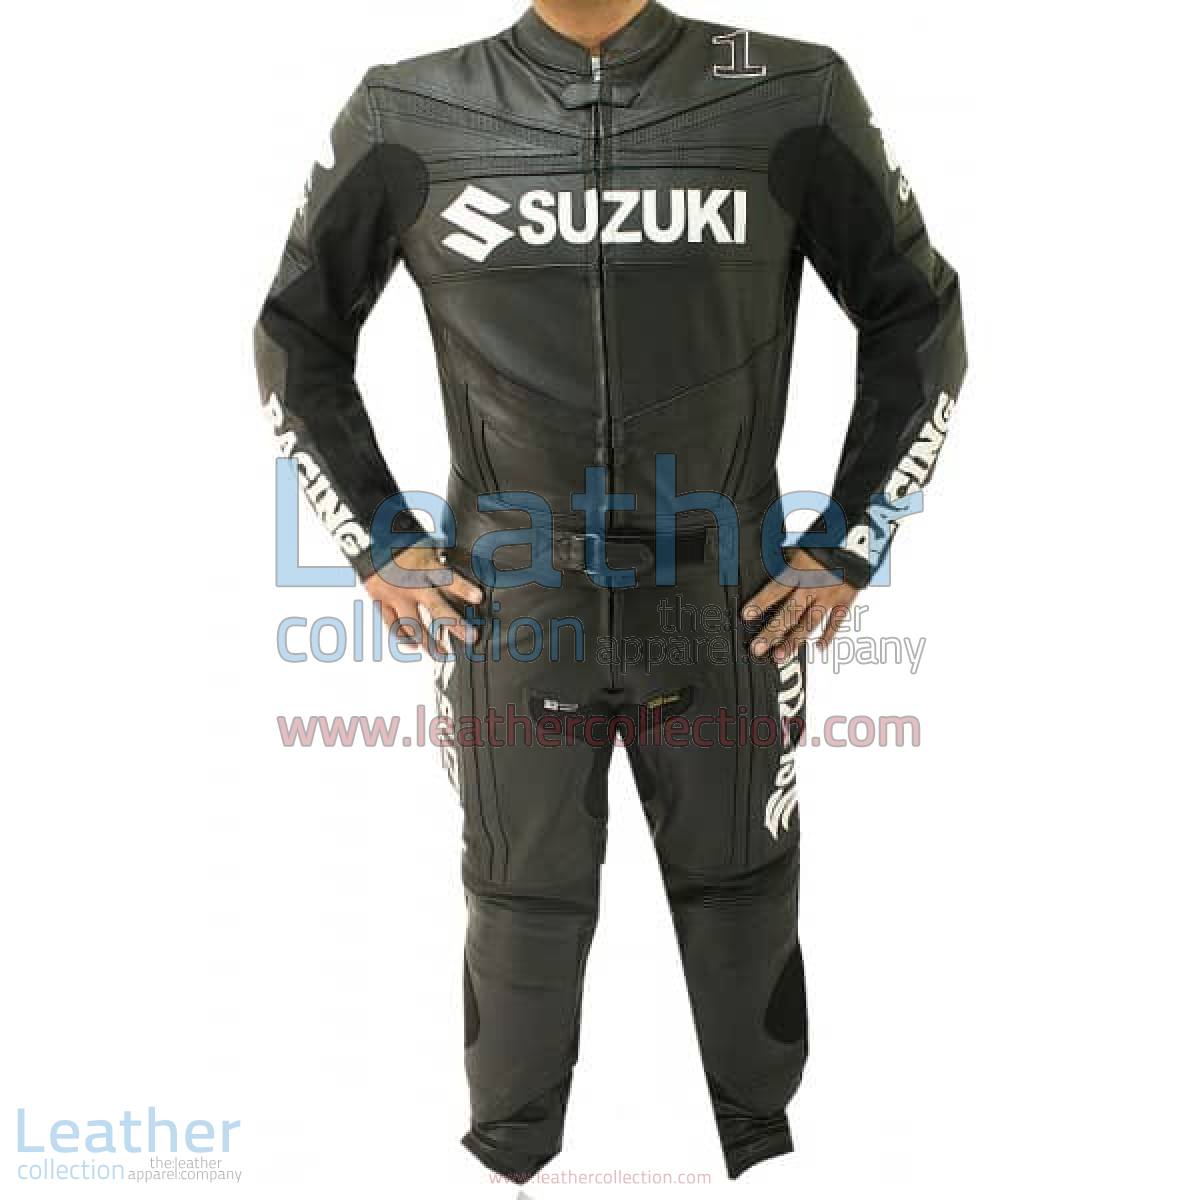 Suzuki Leather Racing Suit | leather racing suit,suzuki racing